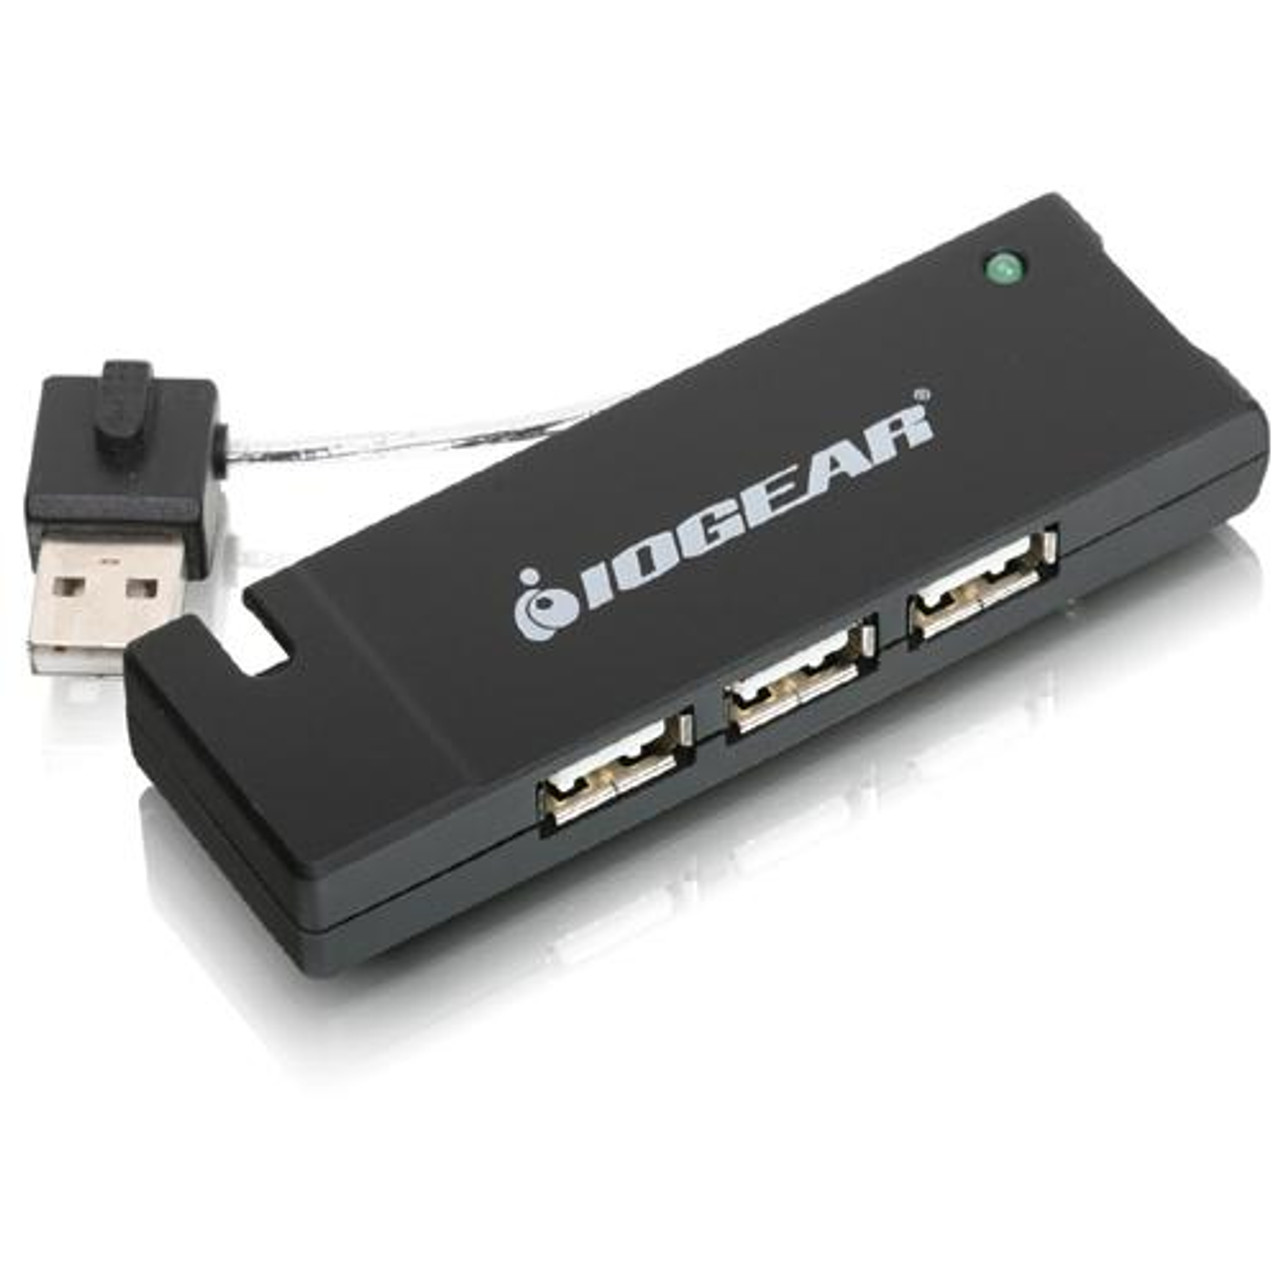 GUH285TD12 IOGEAR 4-port Hi-Speed USB 2.0 Hub 4 x 4-pin Type A Female USB 2.0 External